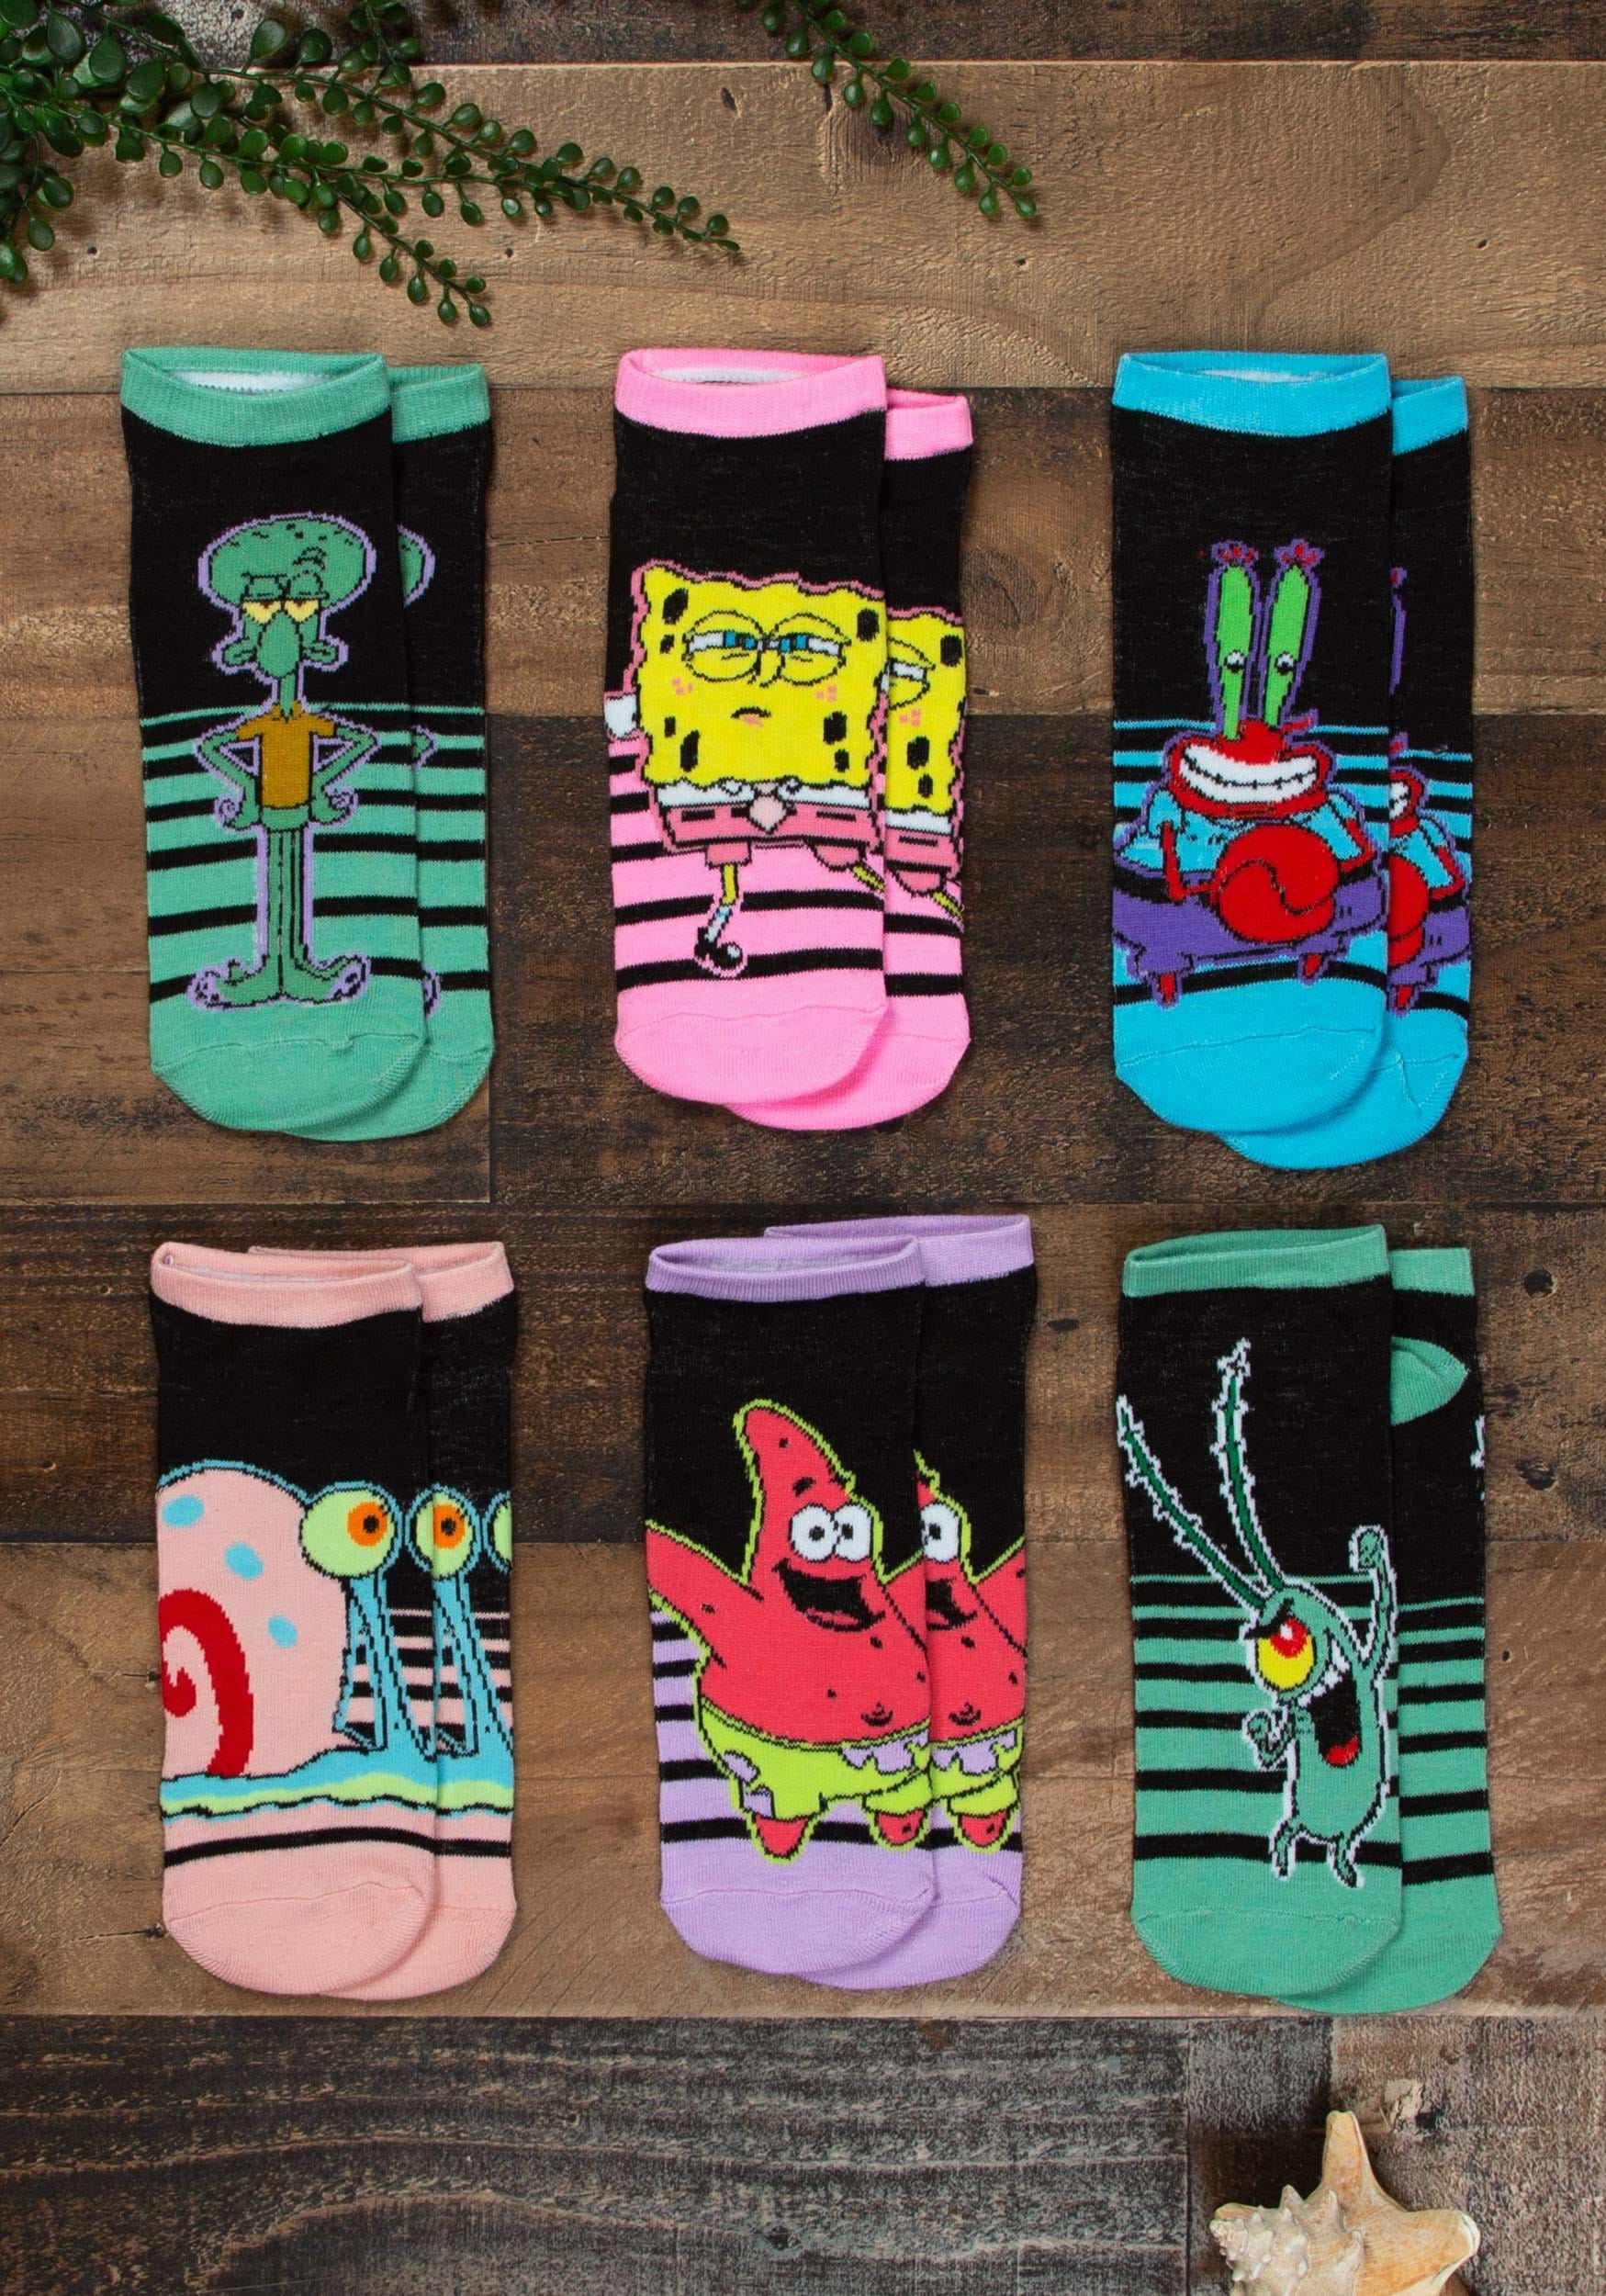 SpongeBob SquarePants, Holiday Women's Slipper Socks, 1-Pack, Size 4-10 